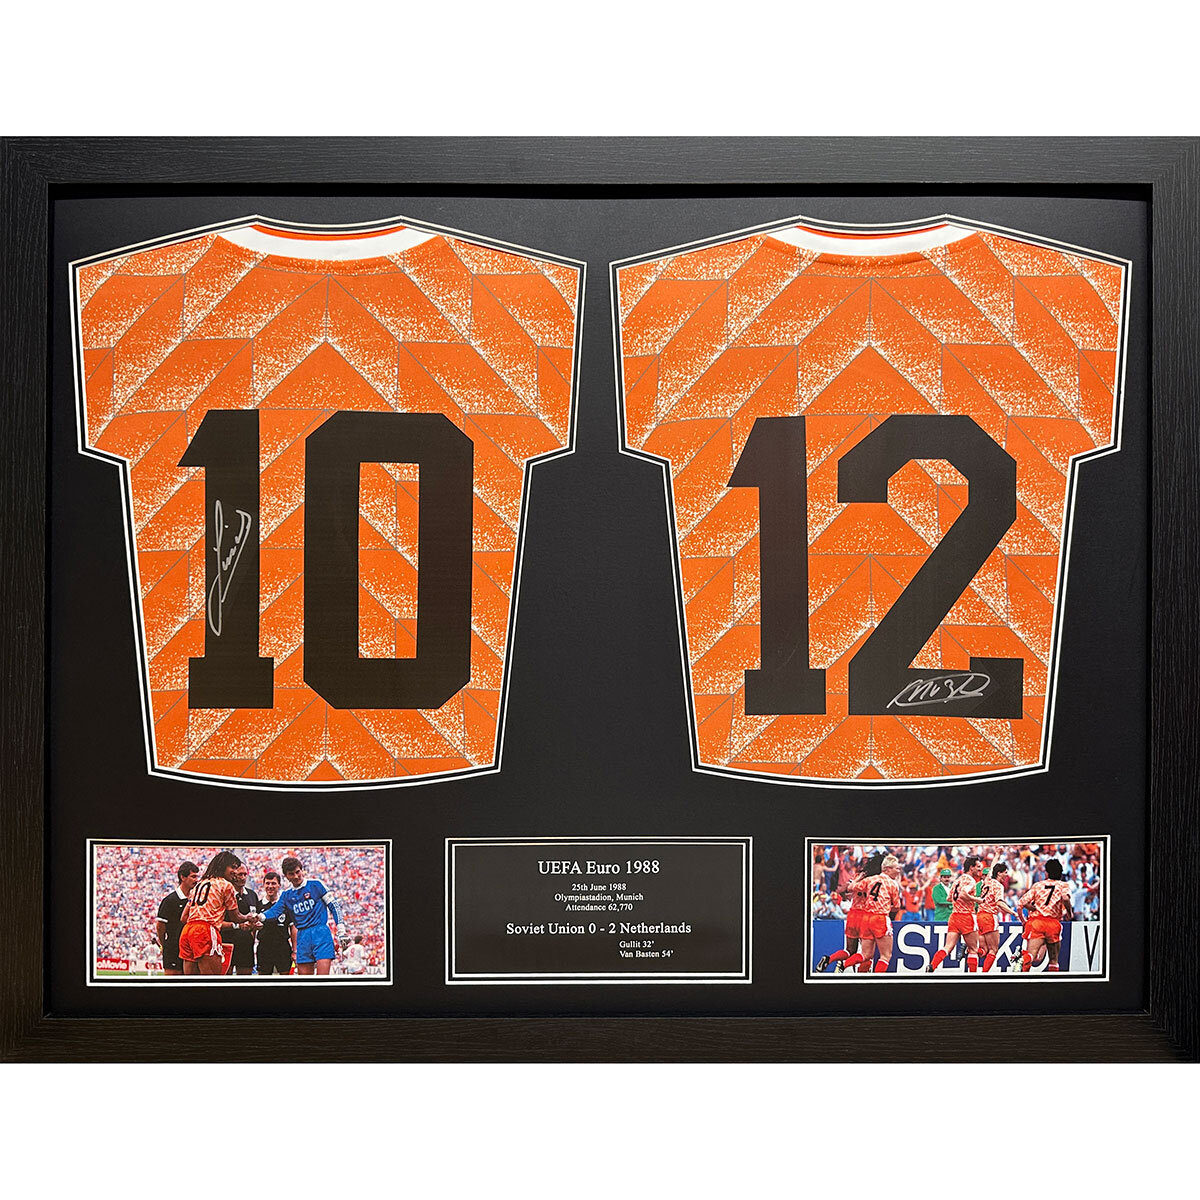 Gullit & Van Basten double signed Netherlands shirt display